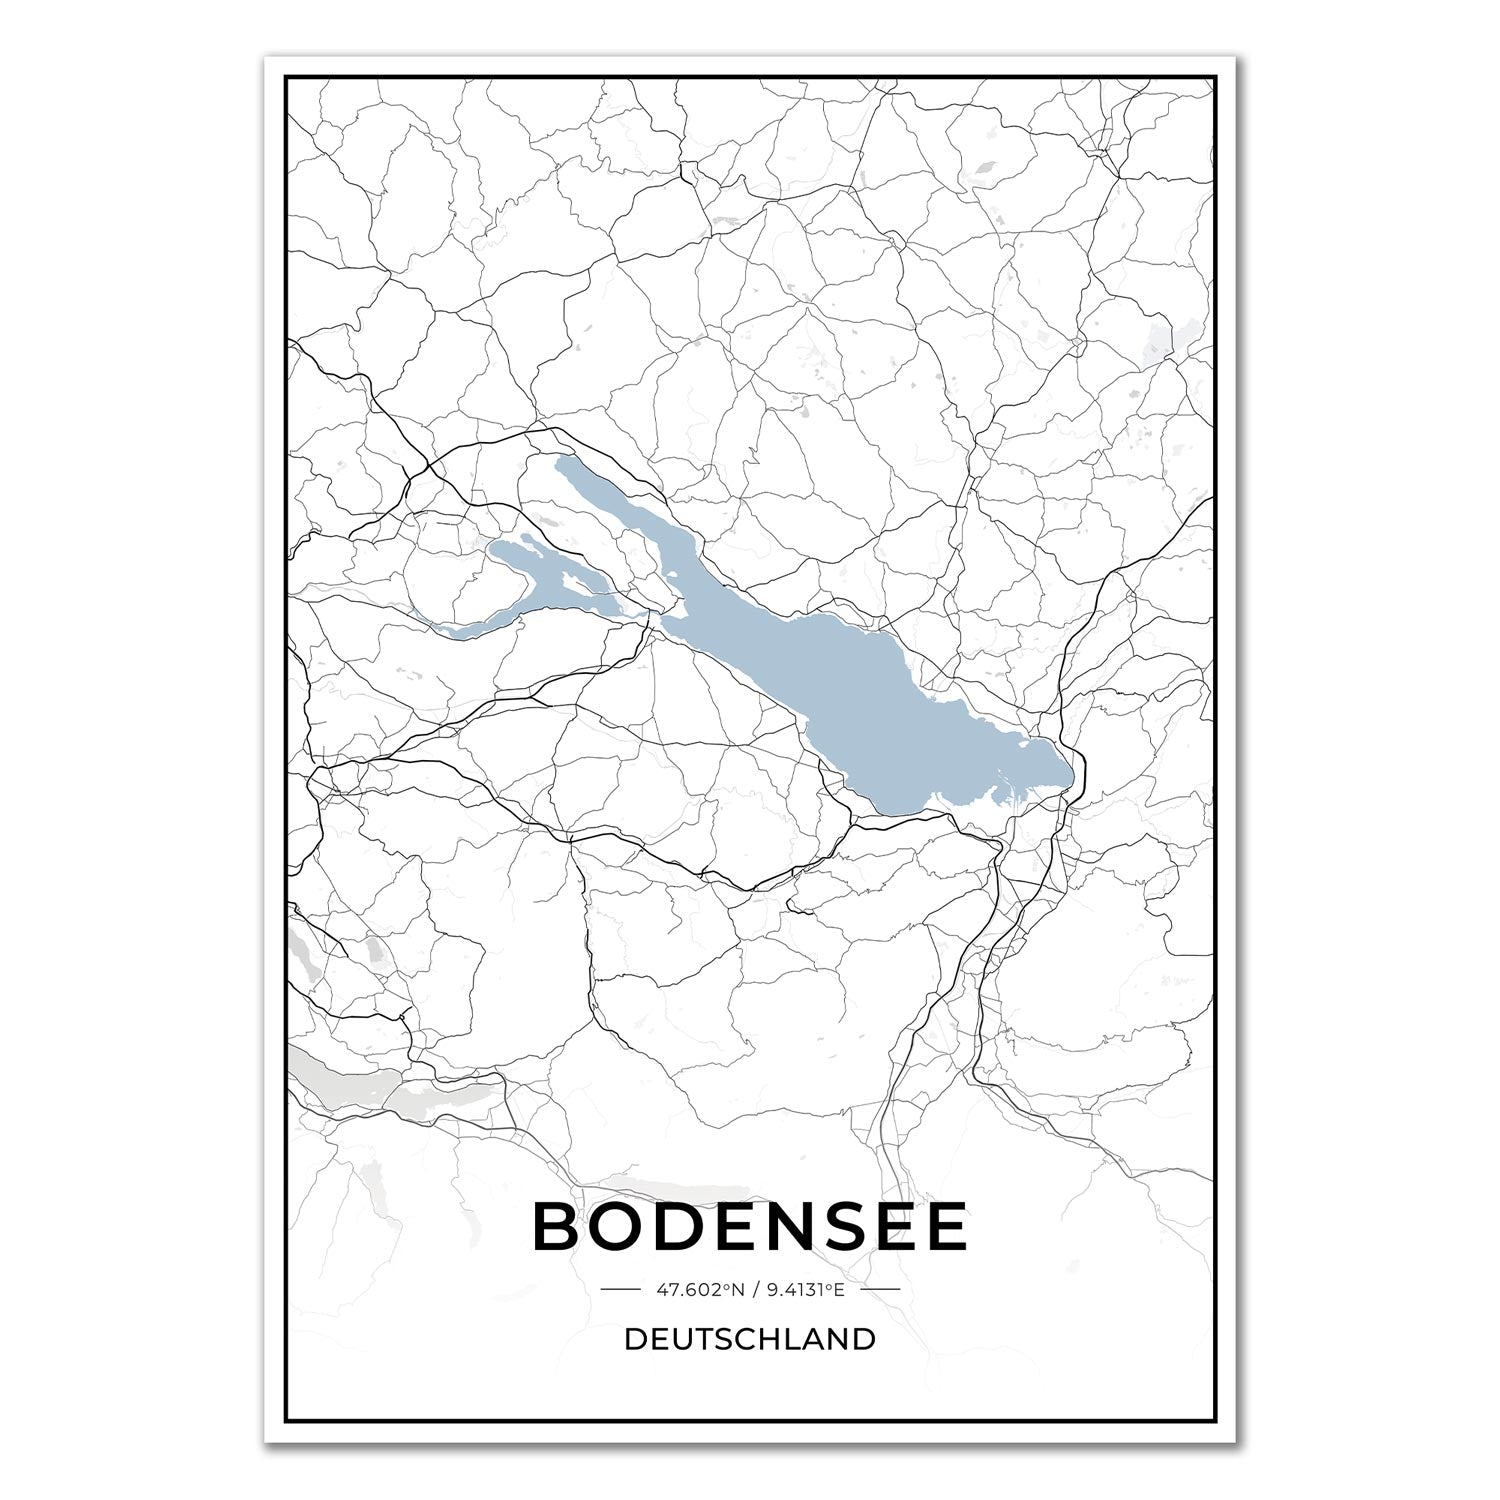 See Karten Poster - Bodensee